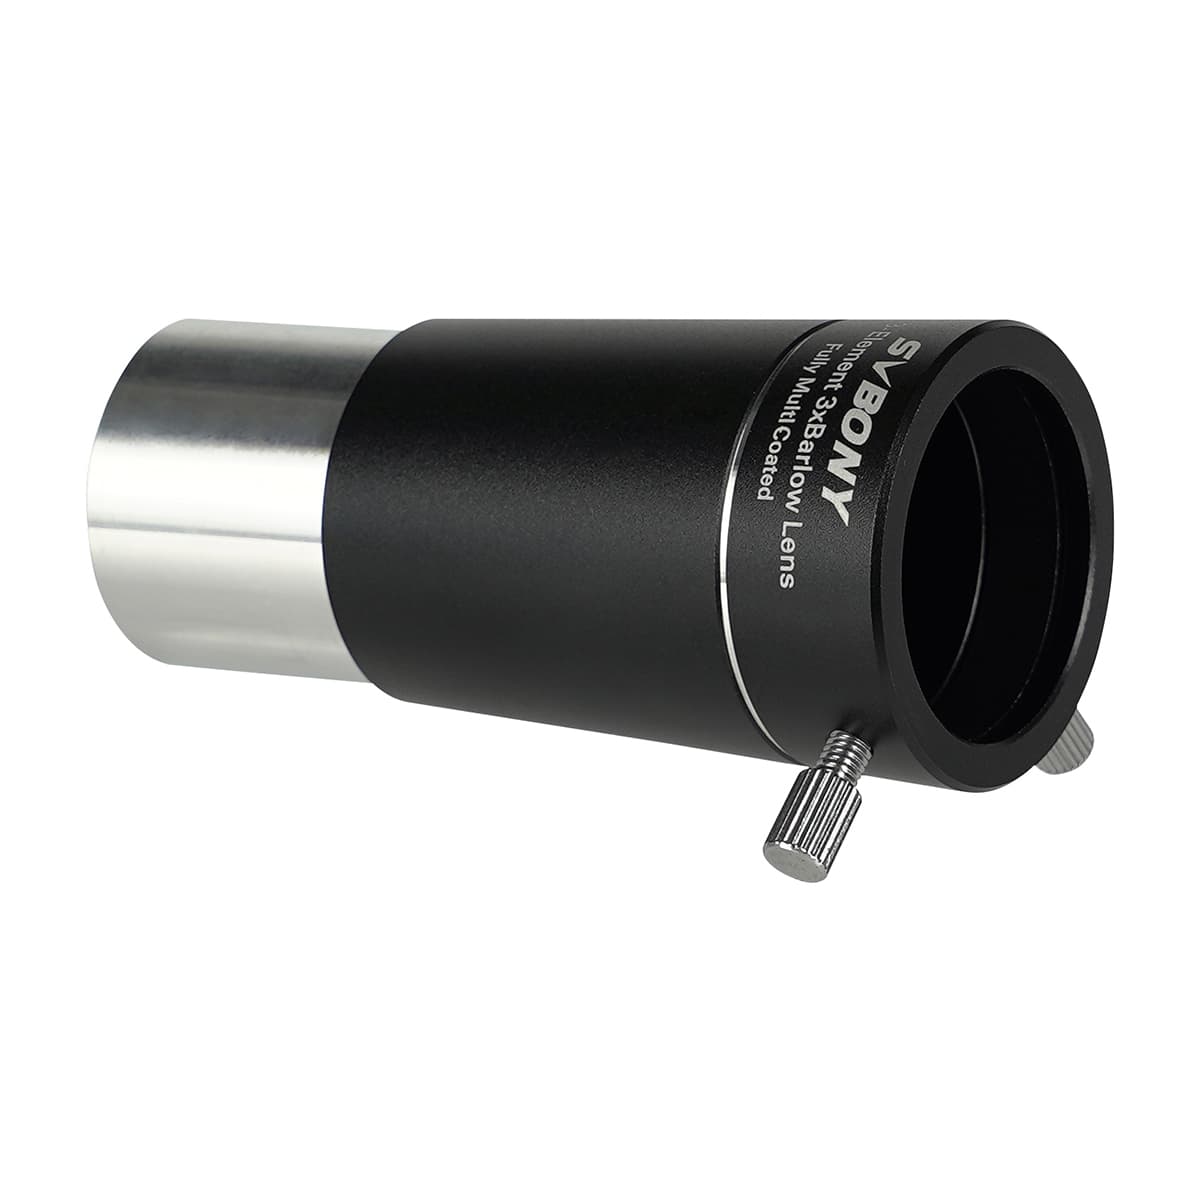 SV213 1.25" 3x Barlow Lens